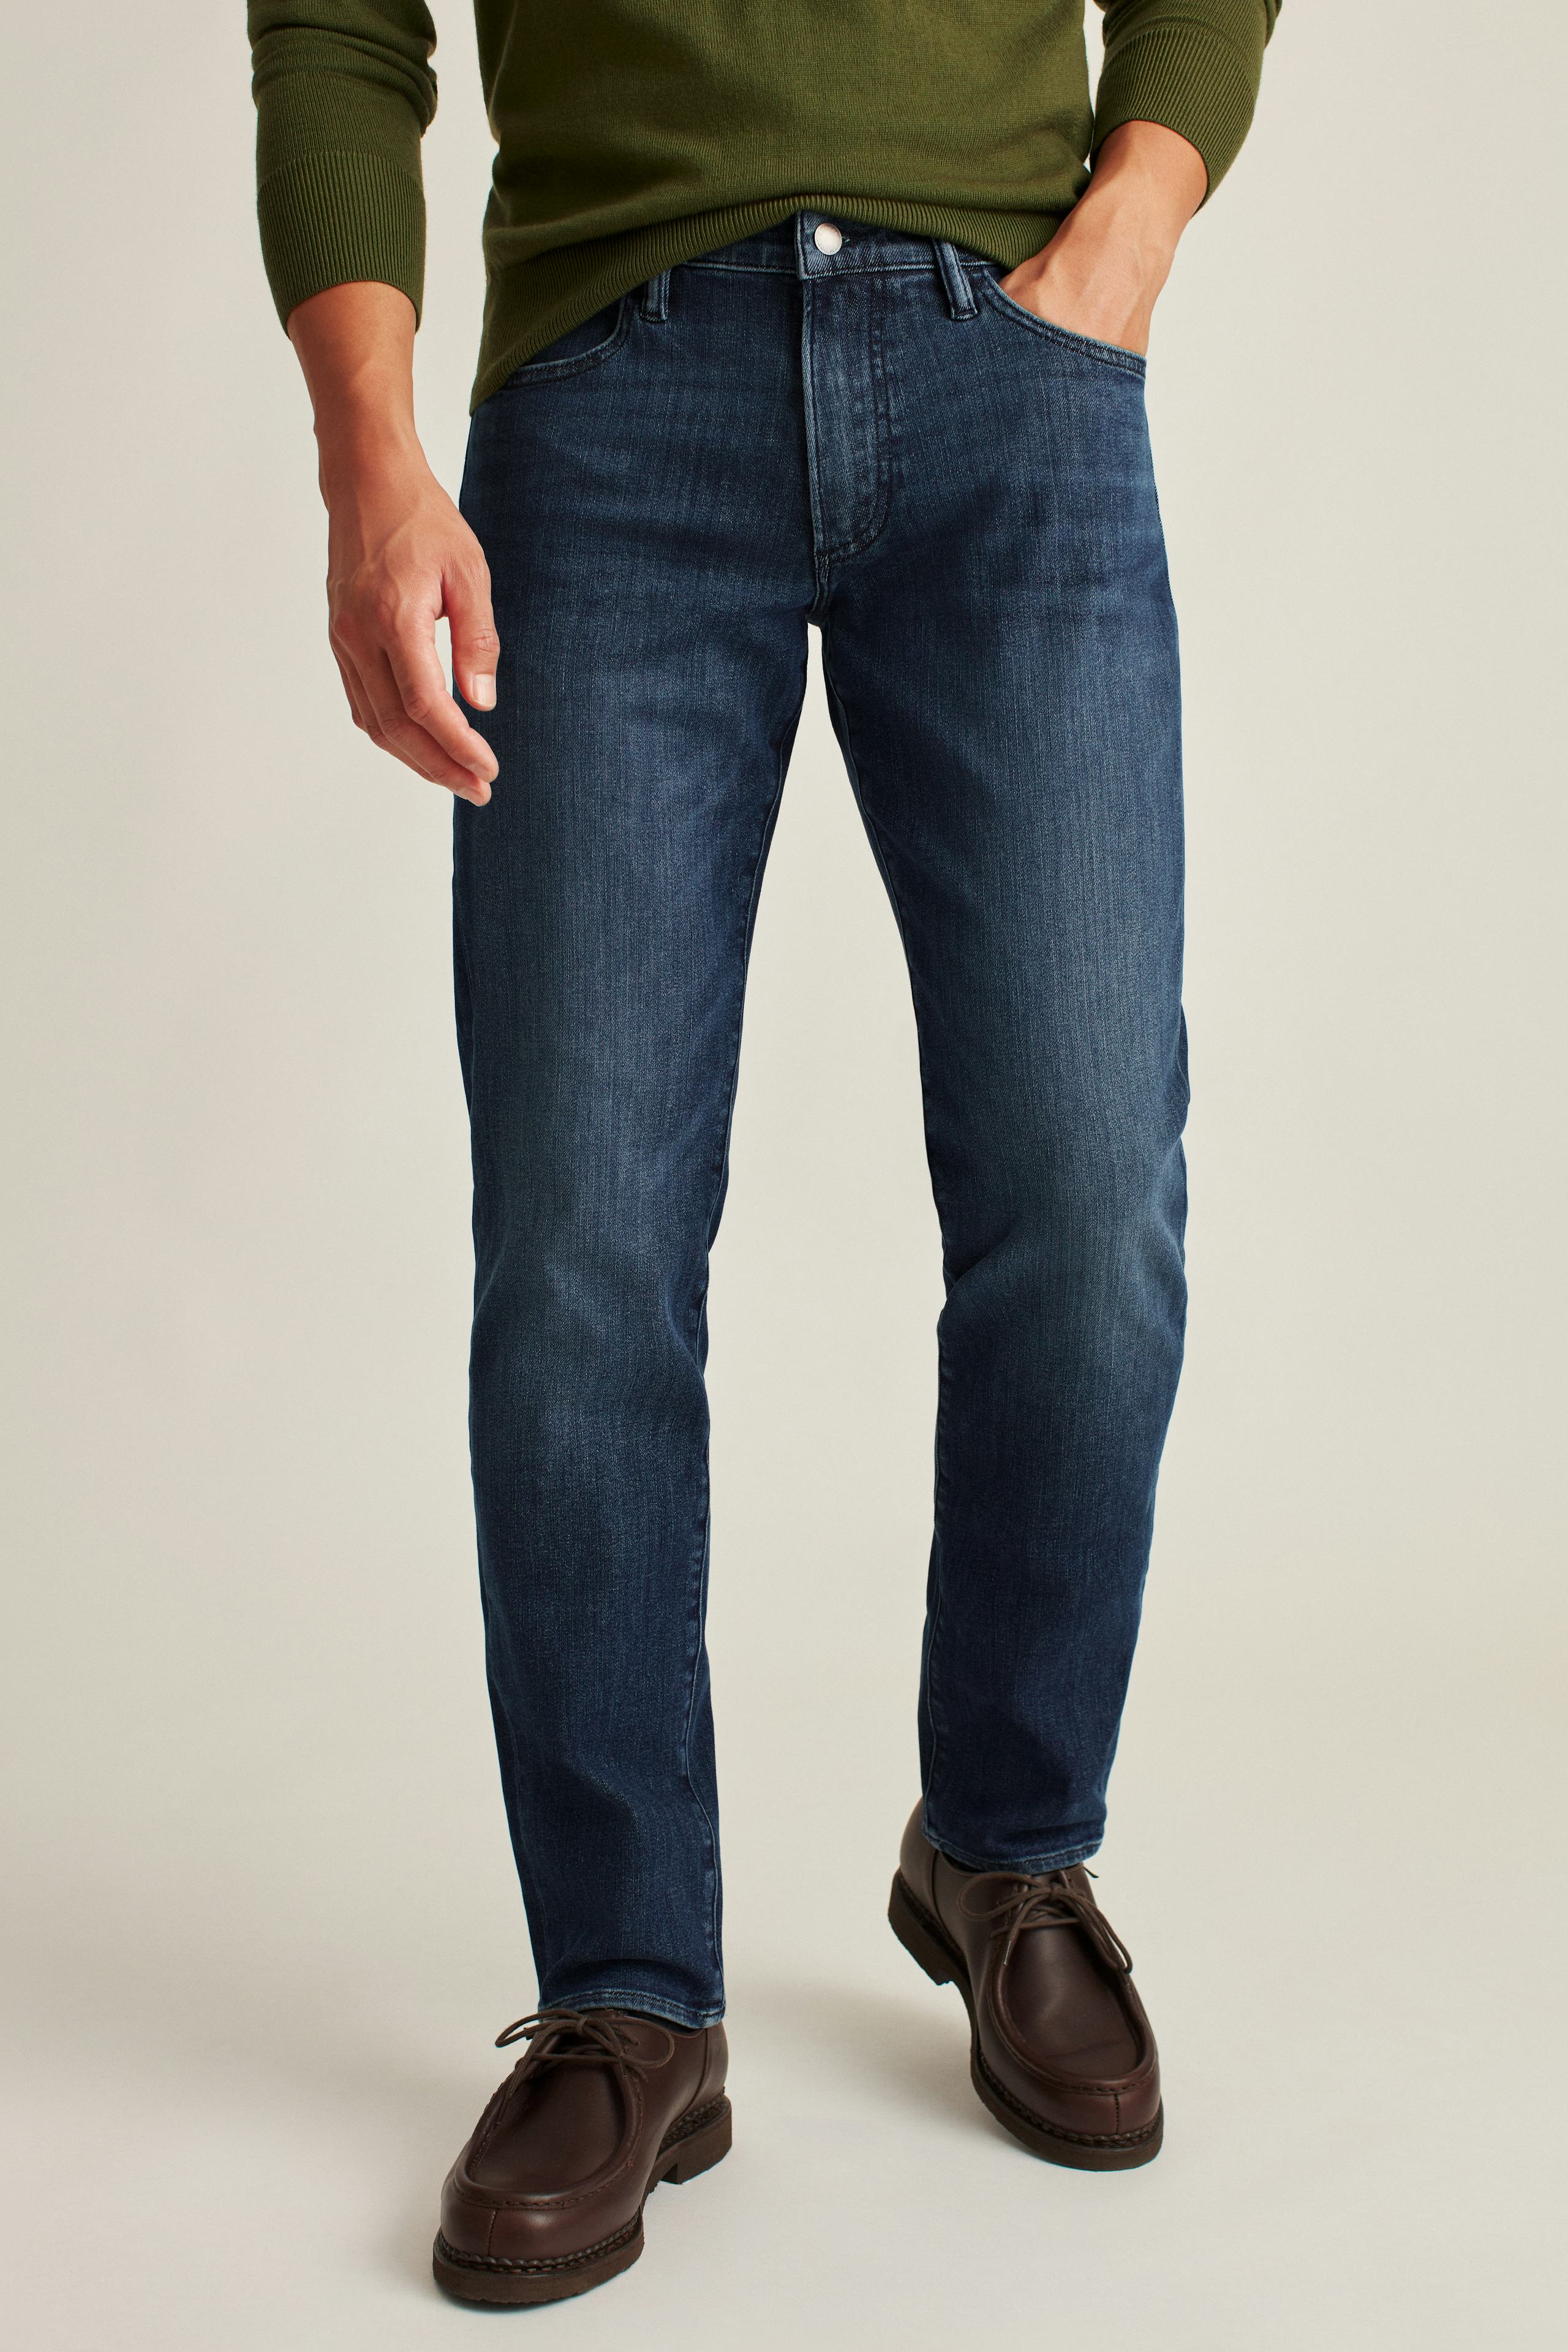 Premium 4-Way Stretch Jeans